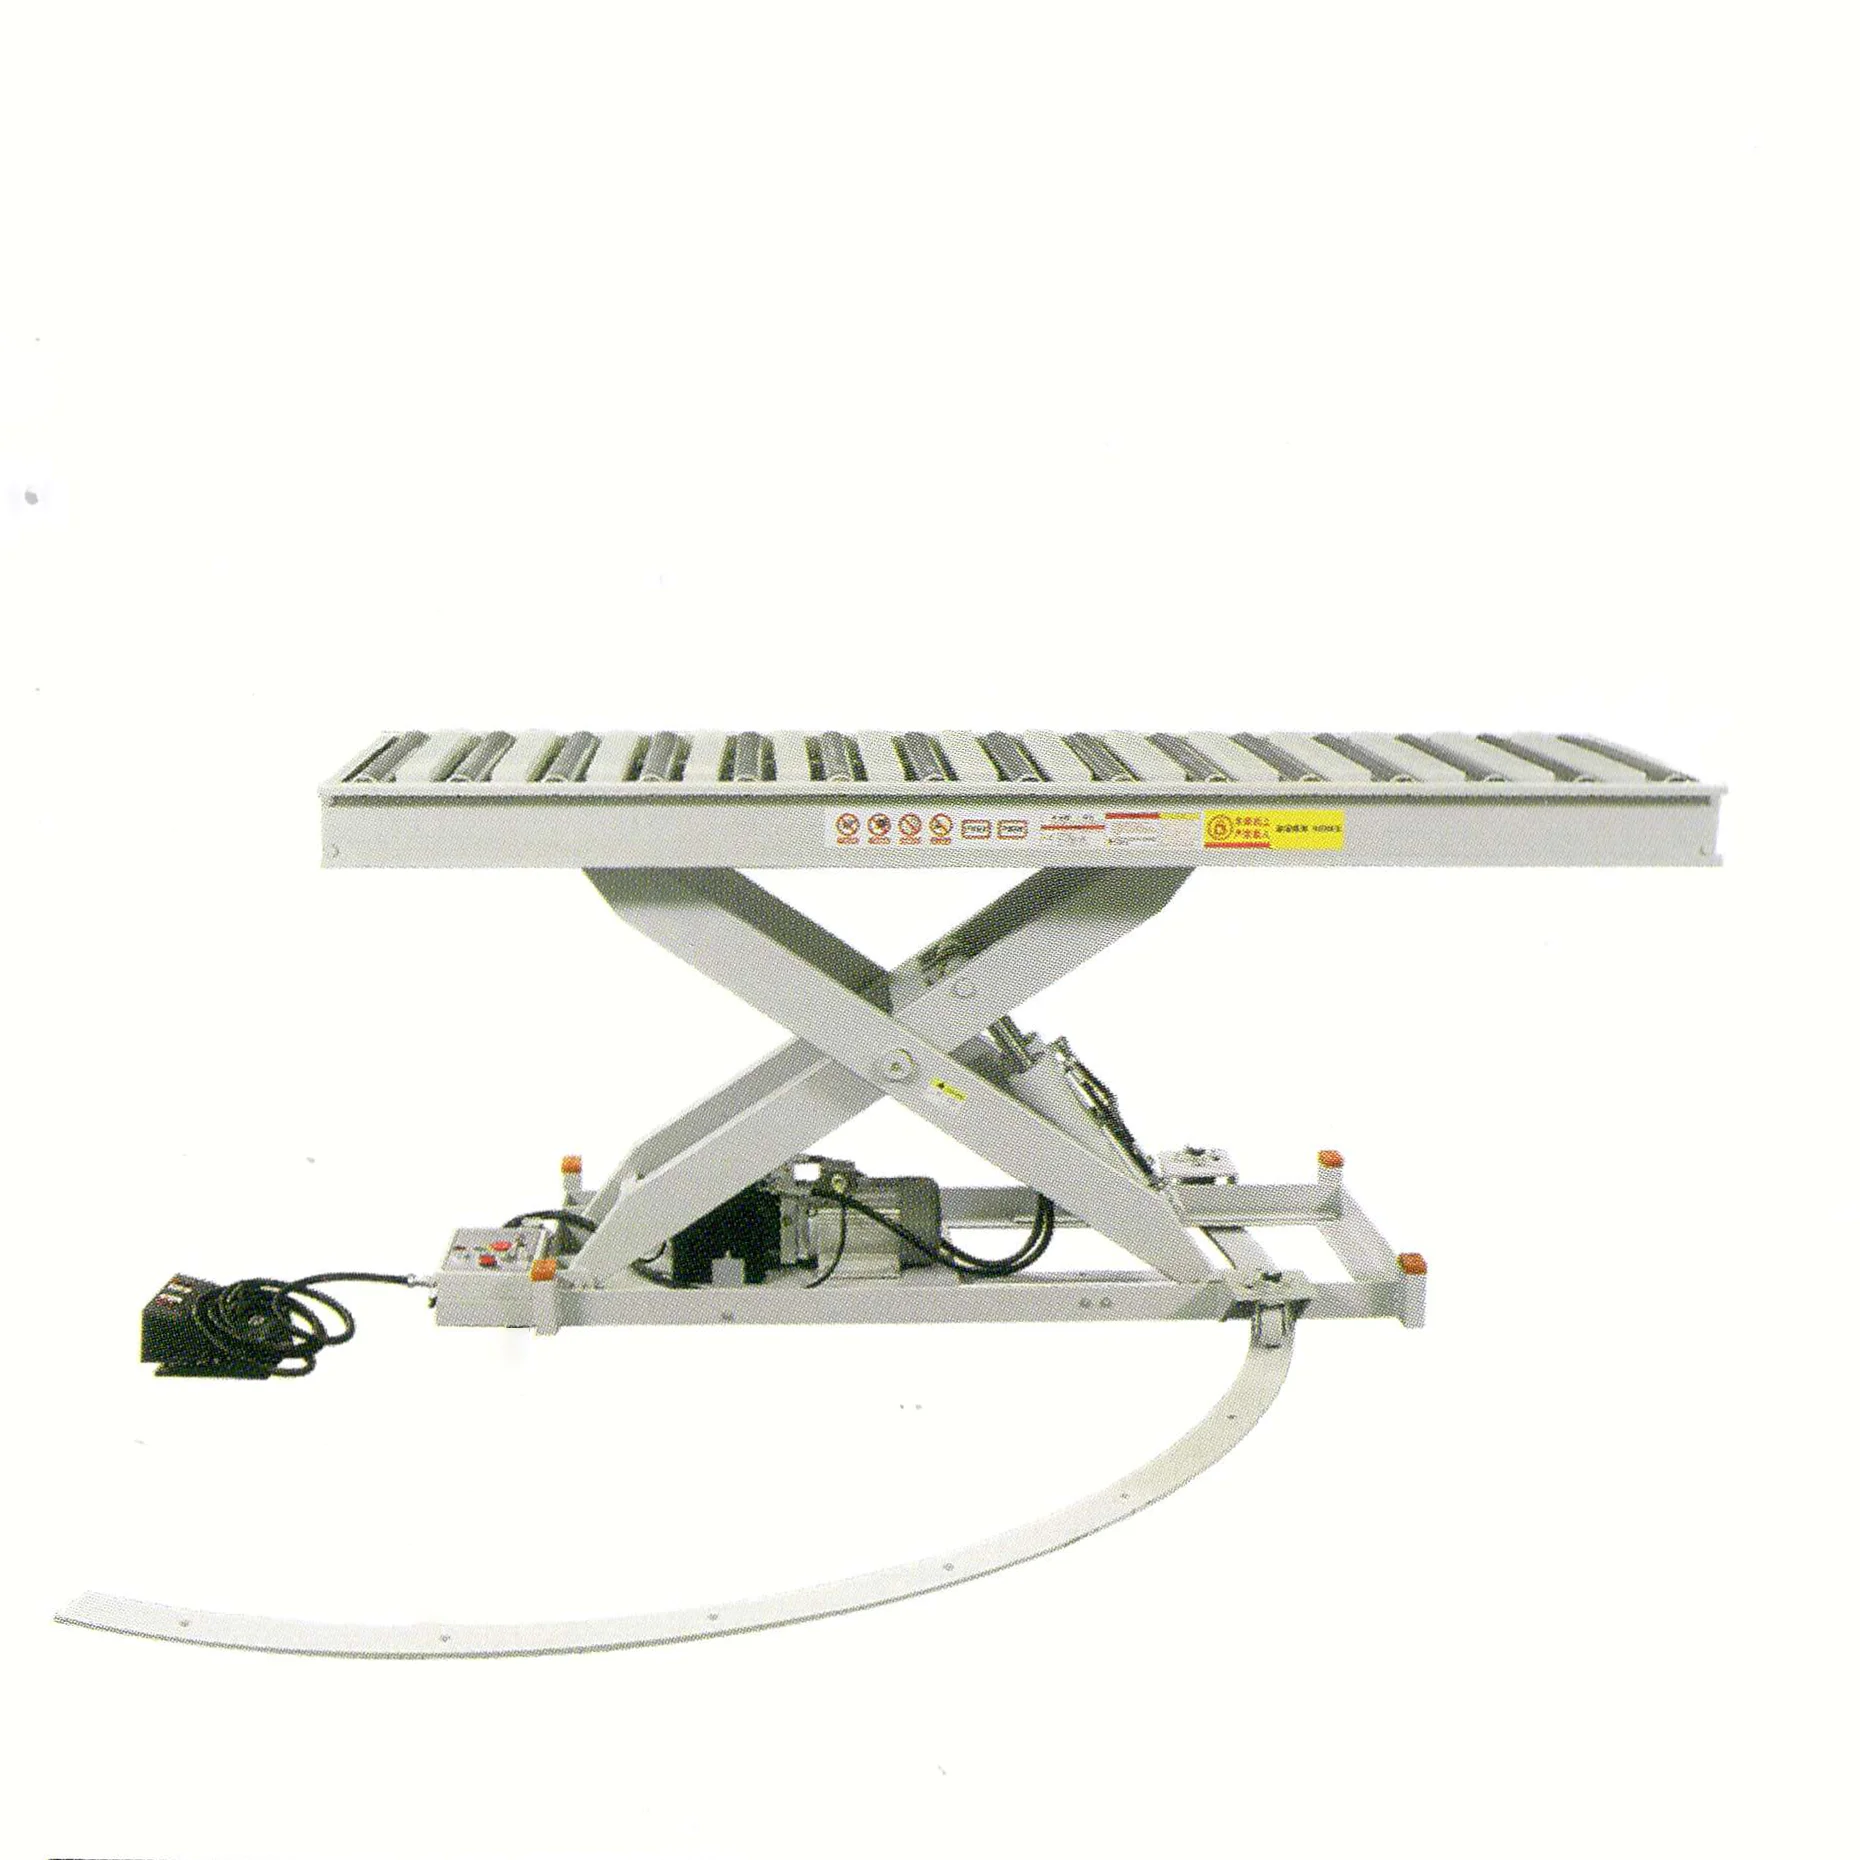 electric lifting platform fixed scissor loading dock lift heavy duty hydraulic multi-stage scissors lifts table